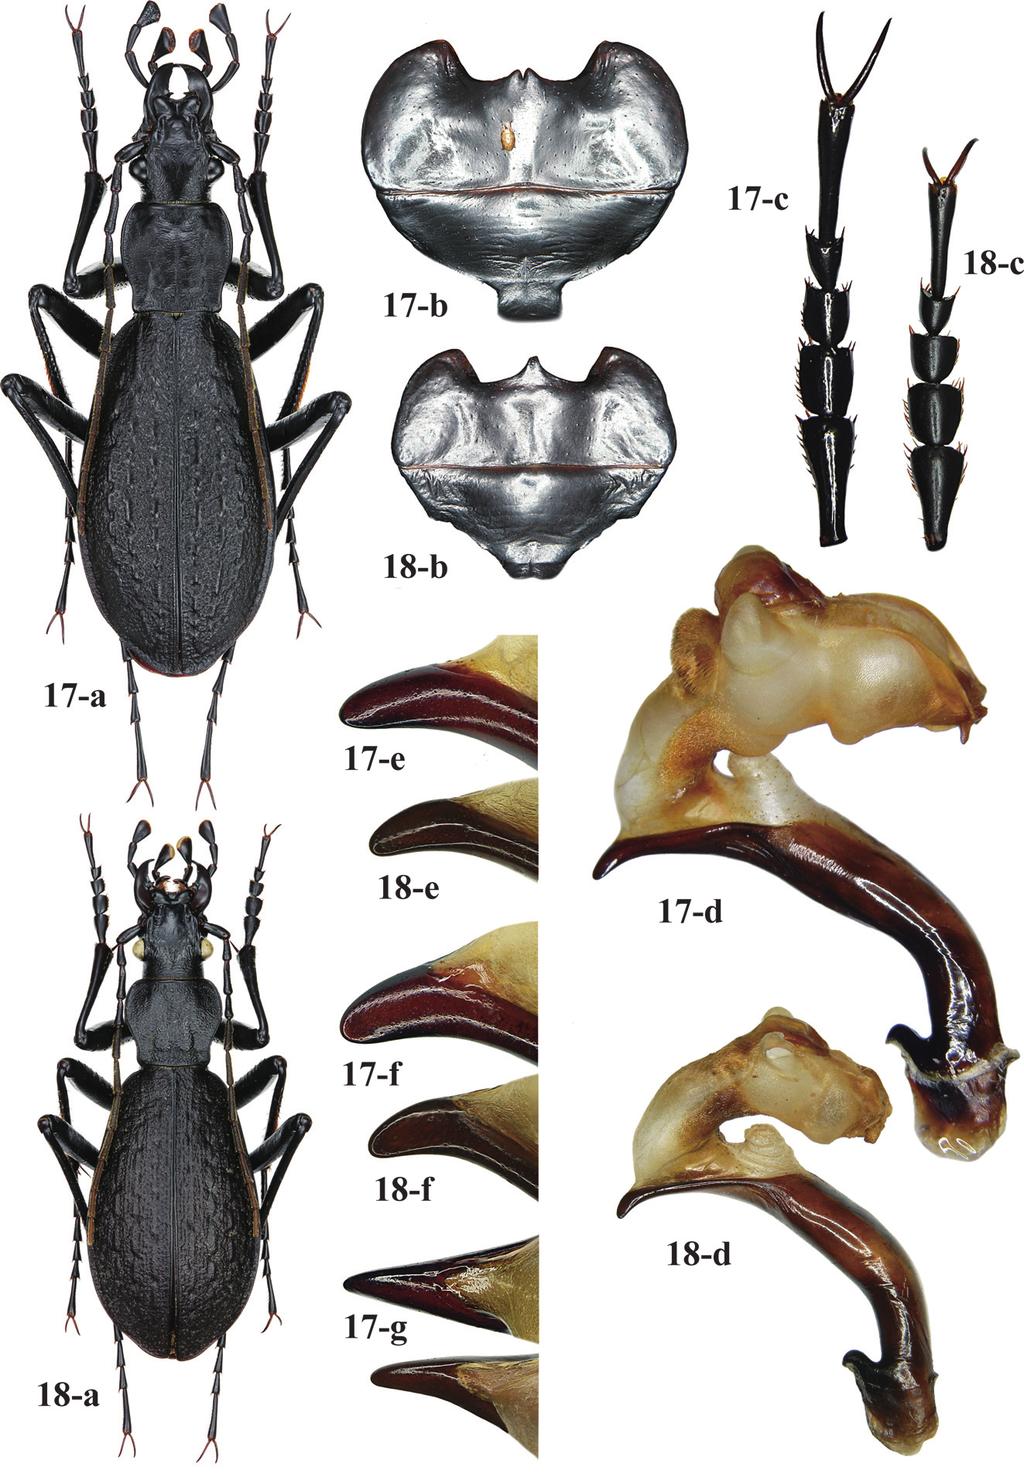 Description of a New Pseudocoptolabrus 169 Figs. 17 18. 17, Carabus (Pseudocoptolabrus) watanabei IBJG6 (holotype) from Imau Bum of northern Myanmar; 18, C. (P.) zuzkae IBJG6 et BG :O>C6, sp. nov.